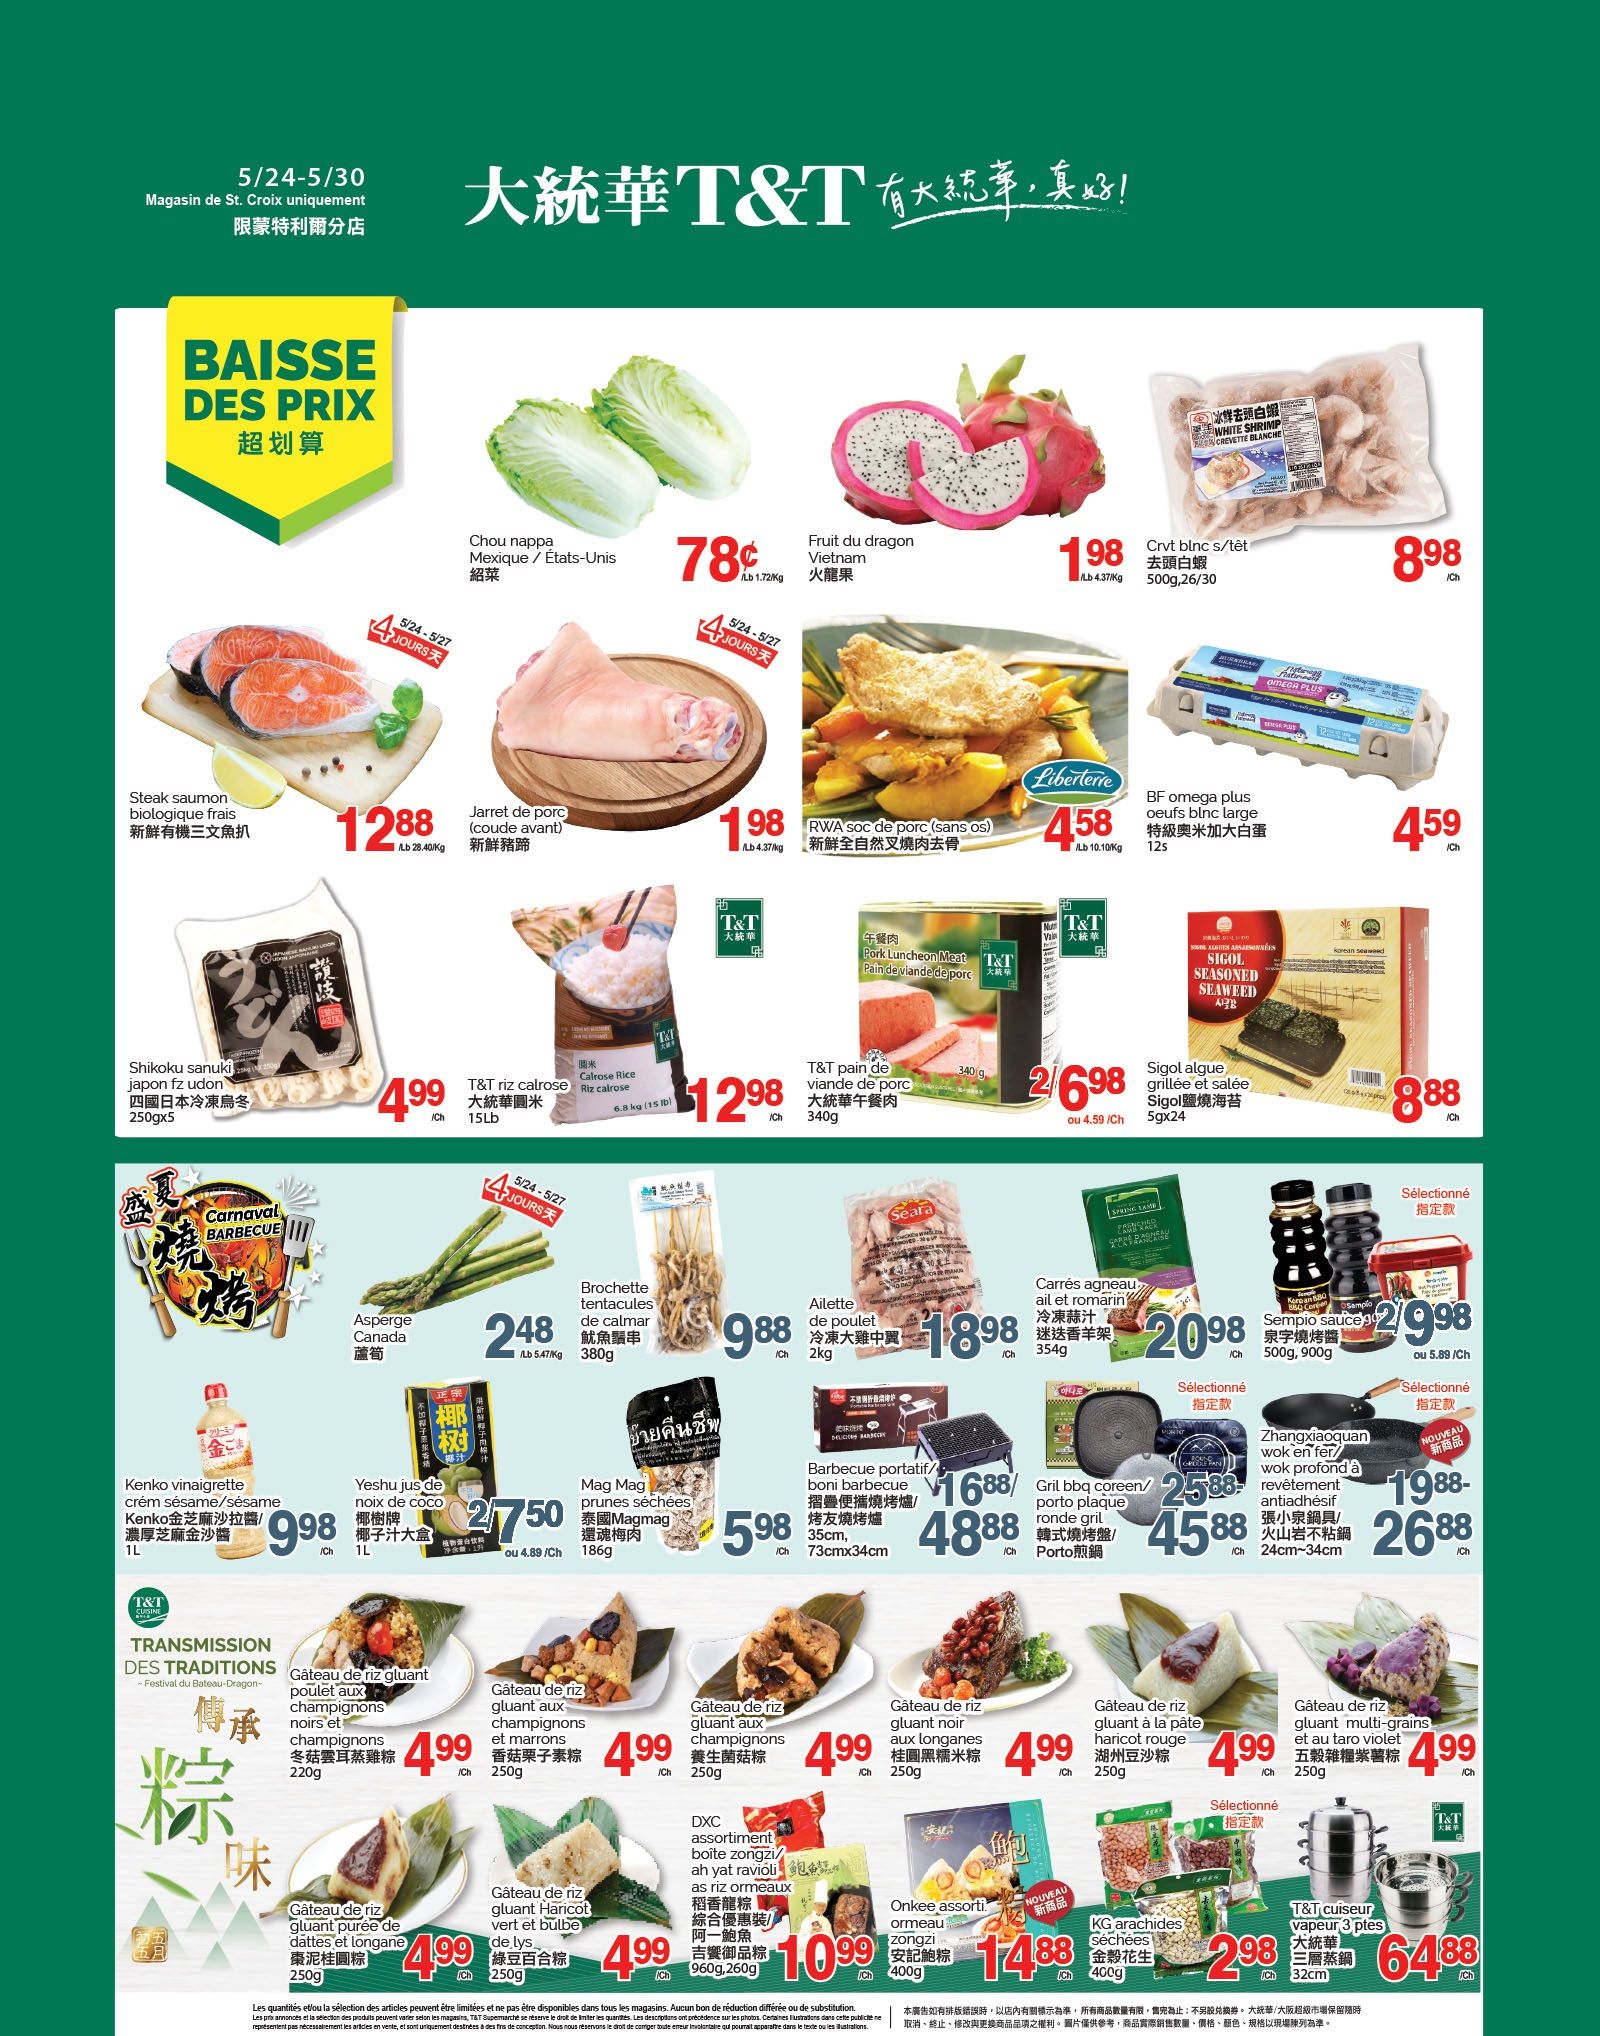 T & T Supermarket - Quebec - Weekly Flyer Specials